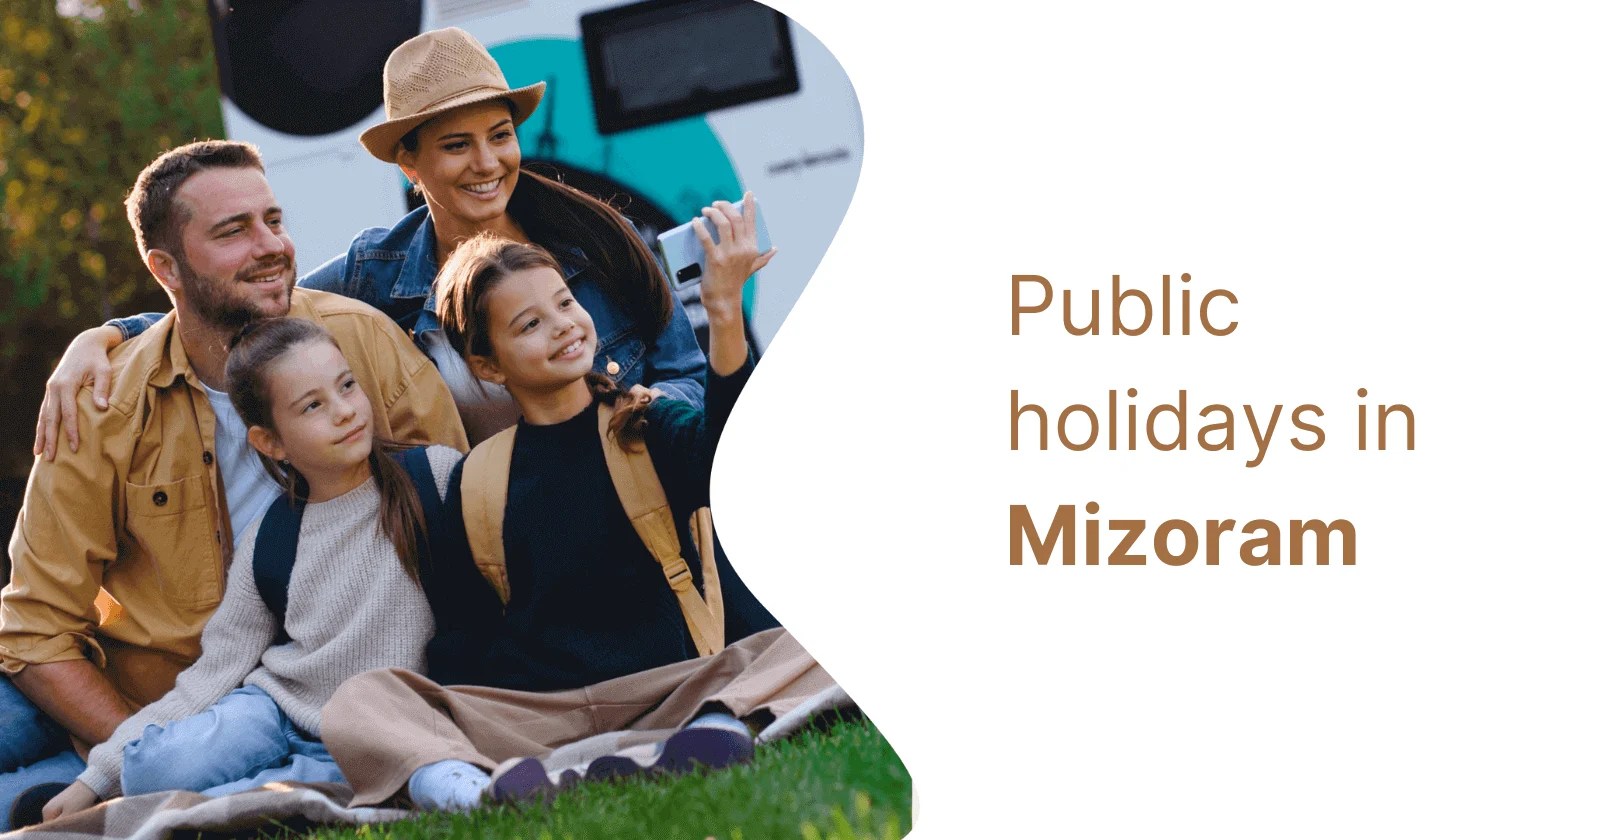 Mizoram Holidays: List of Public Holidays in Mizoram in 2023